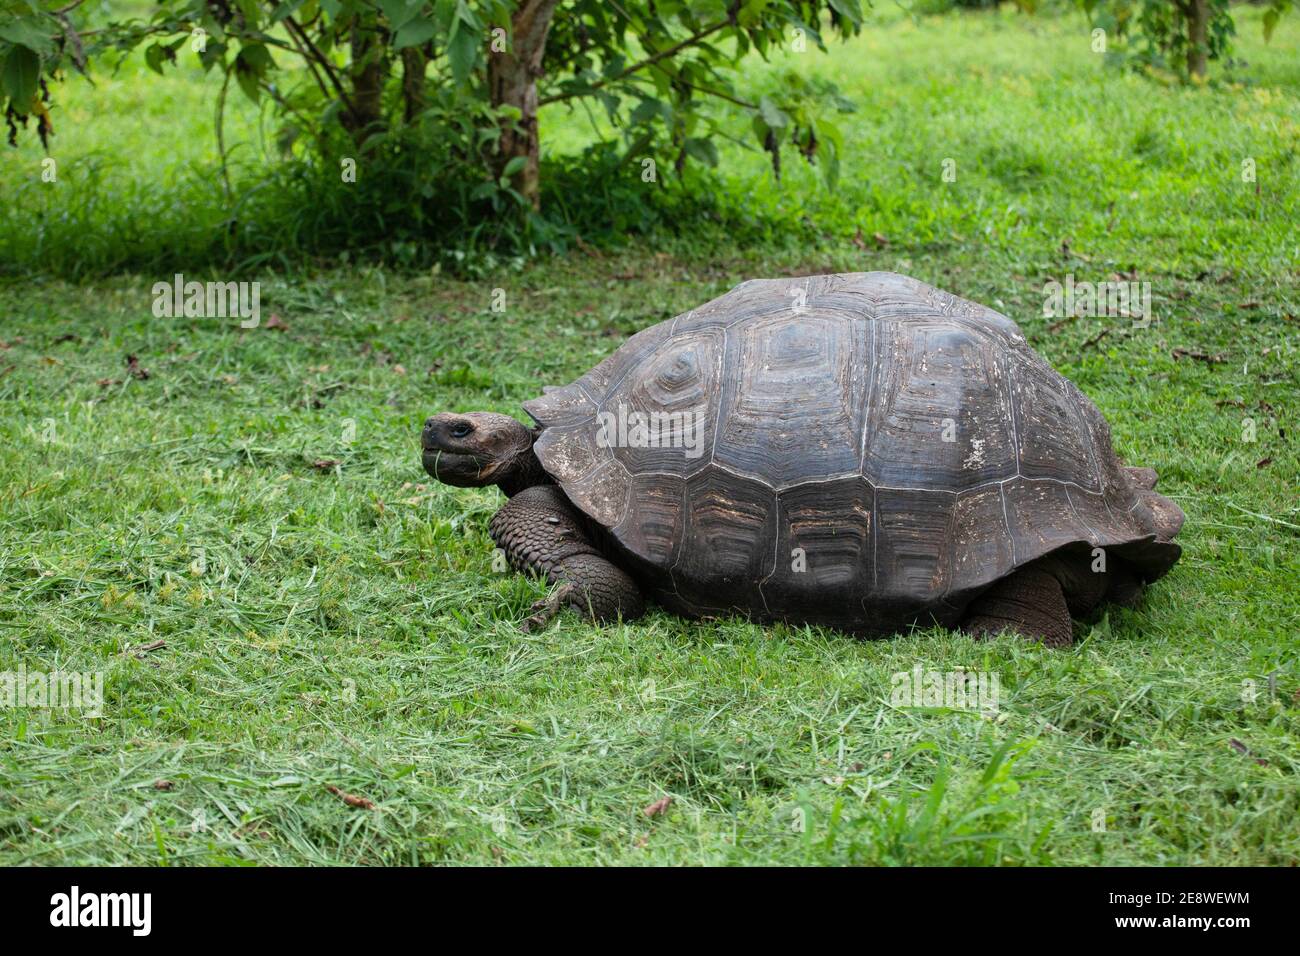 Una tartaruga Galapagos, Chelonoidis porteri, mangiare erba Foto Stock